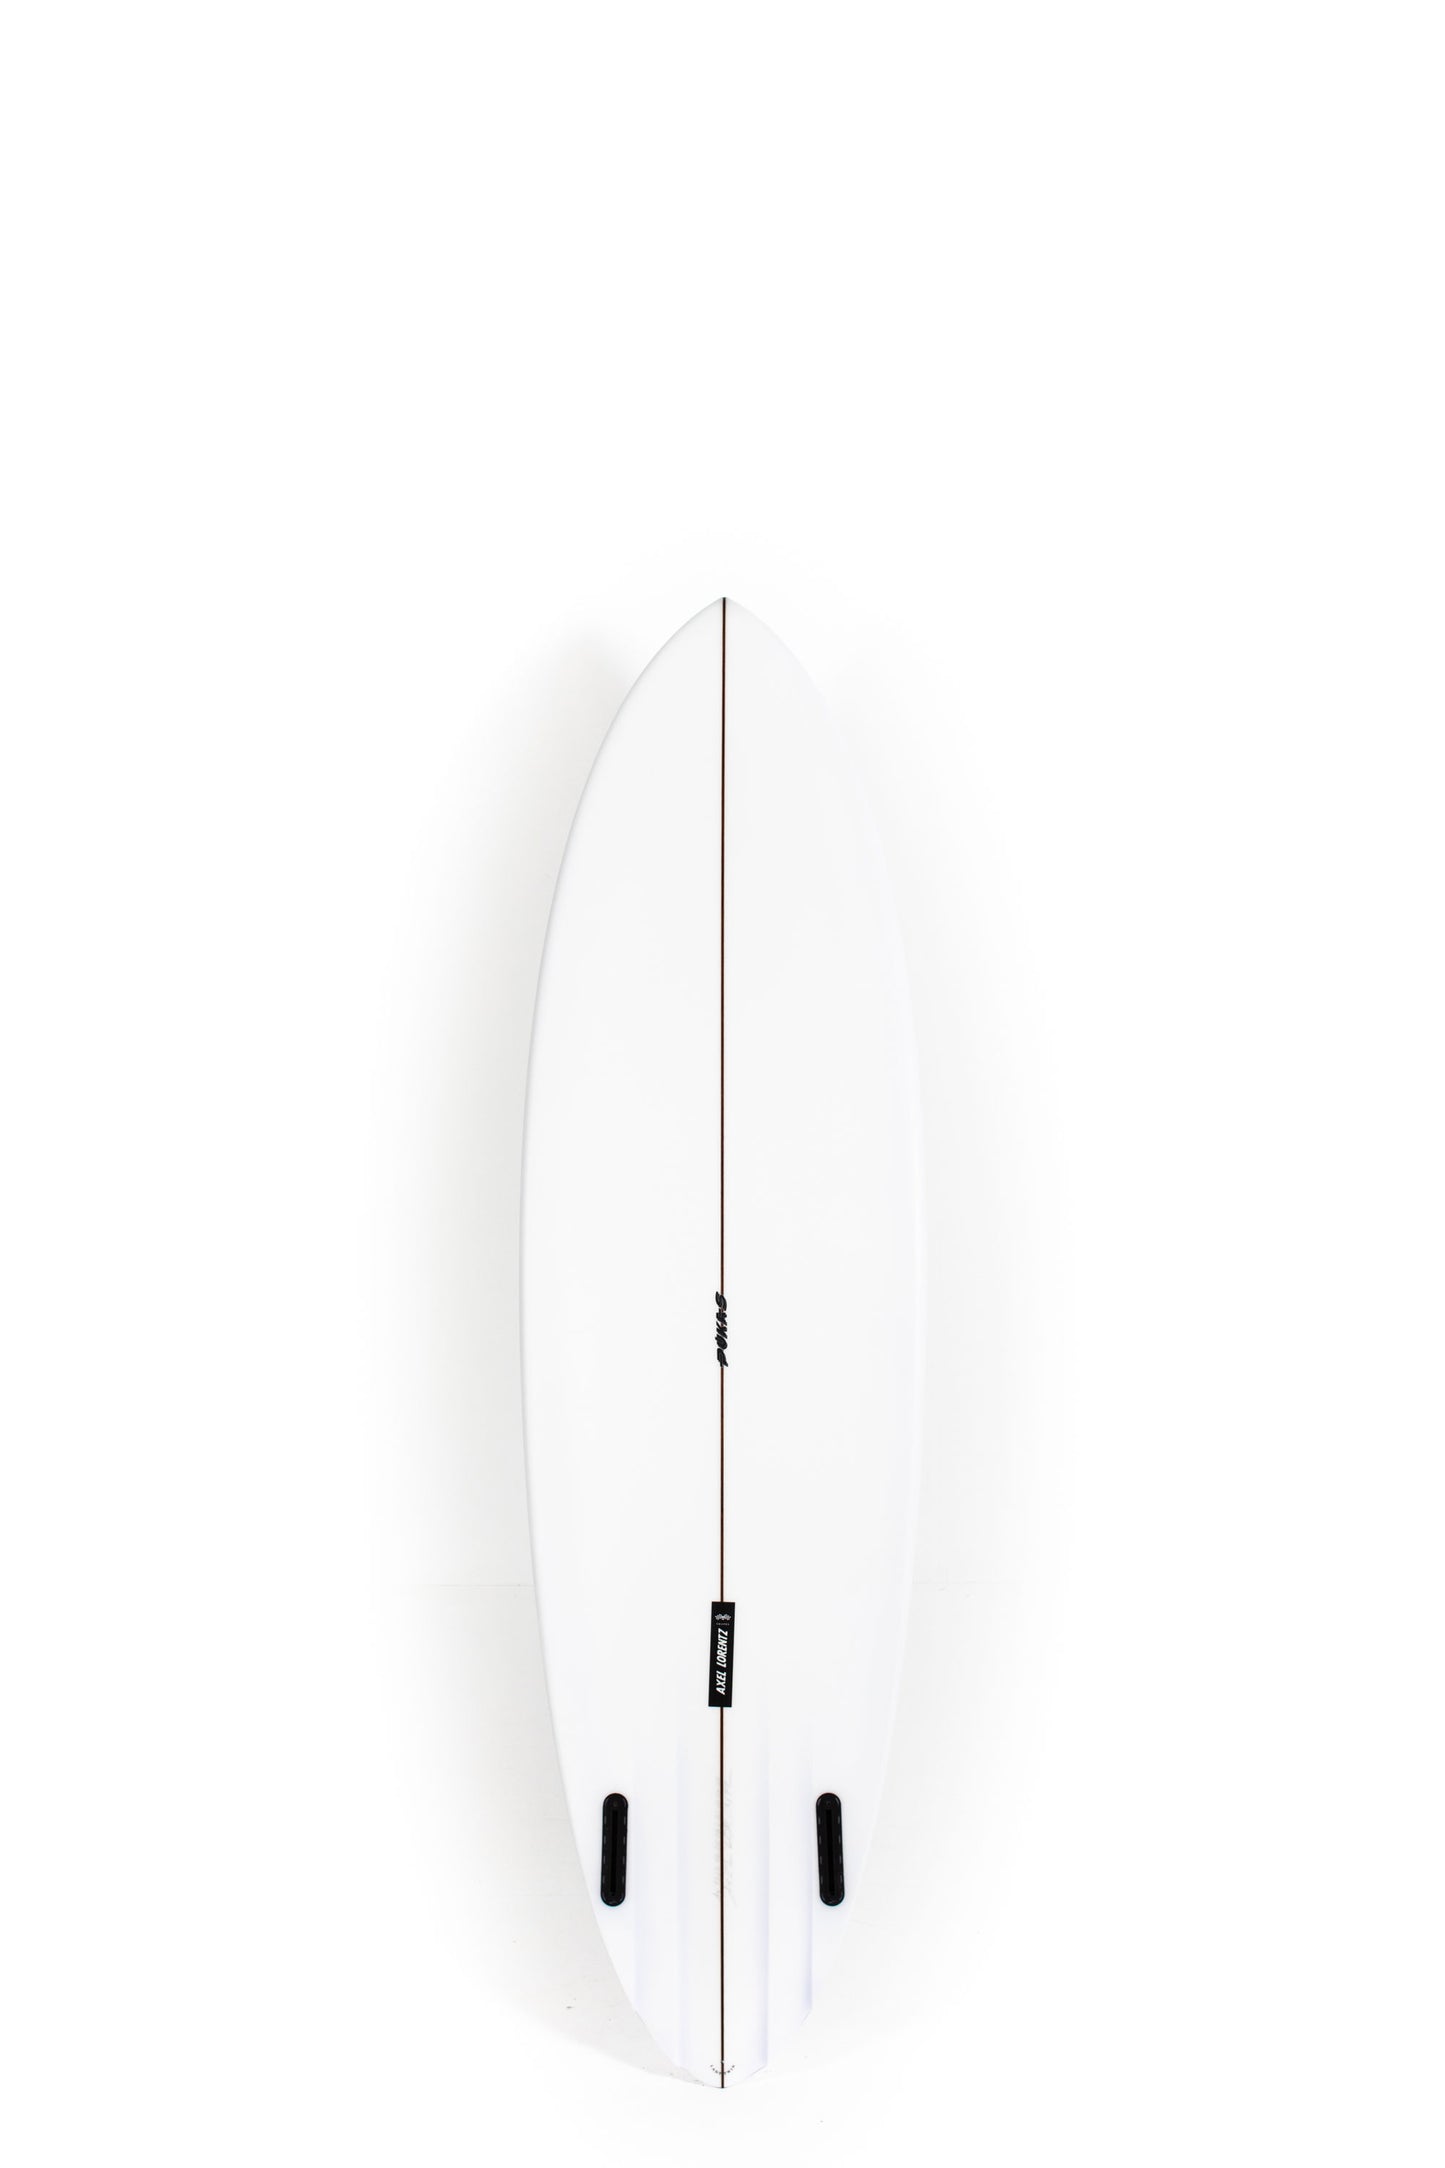 Pukas Surf Shop - Pukas Surfboard - LADY TWIN by Axel Lorentz - 6’6” x 20,88 x 2,85 - 40,6L - AX09324